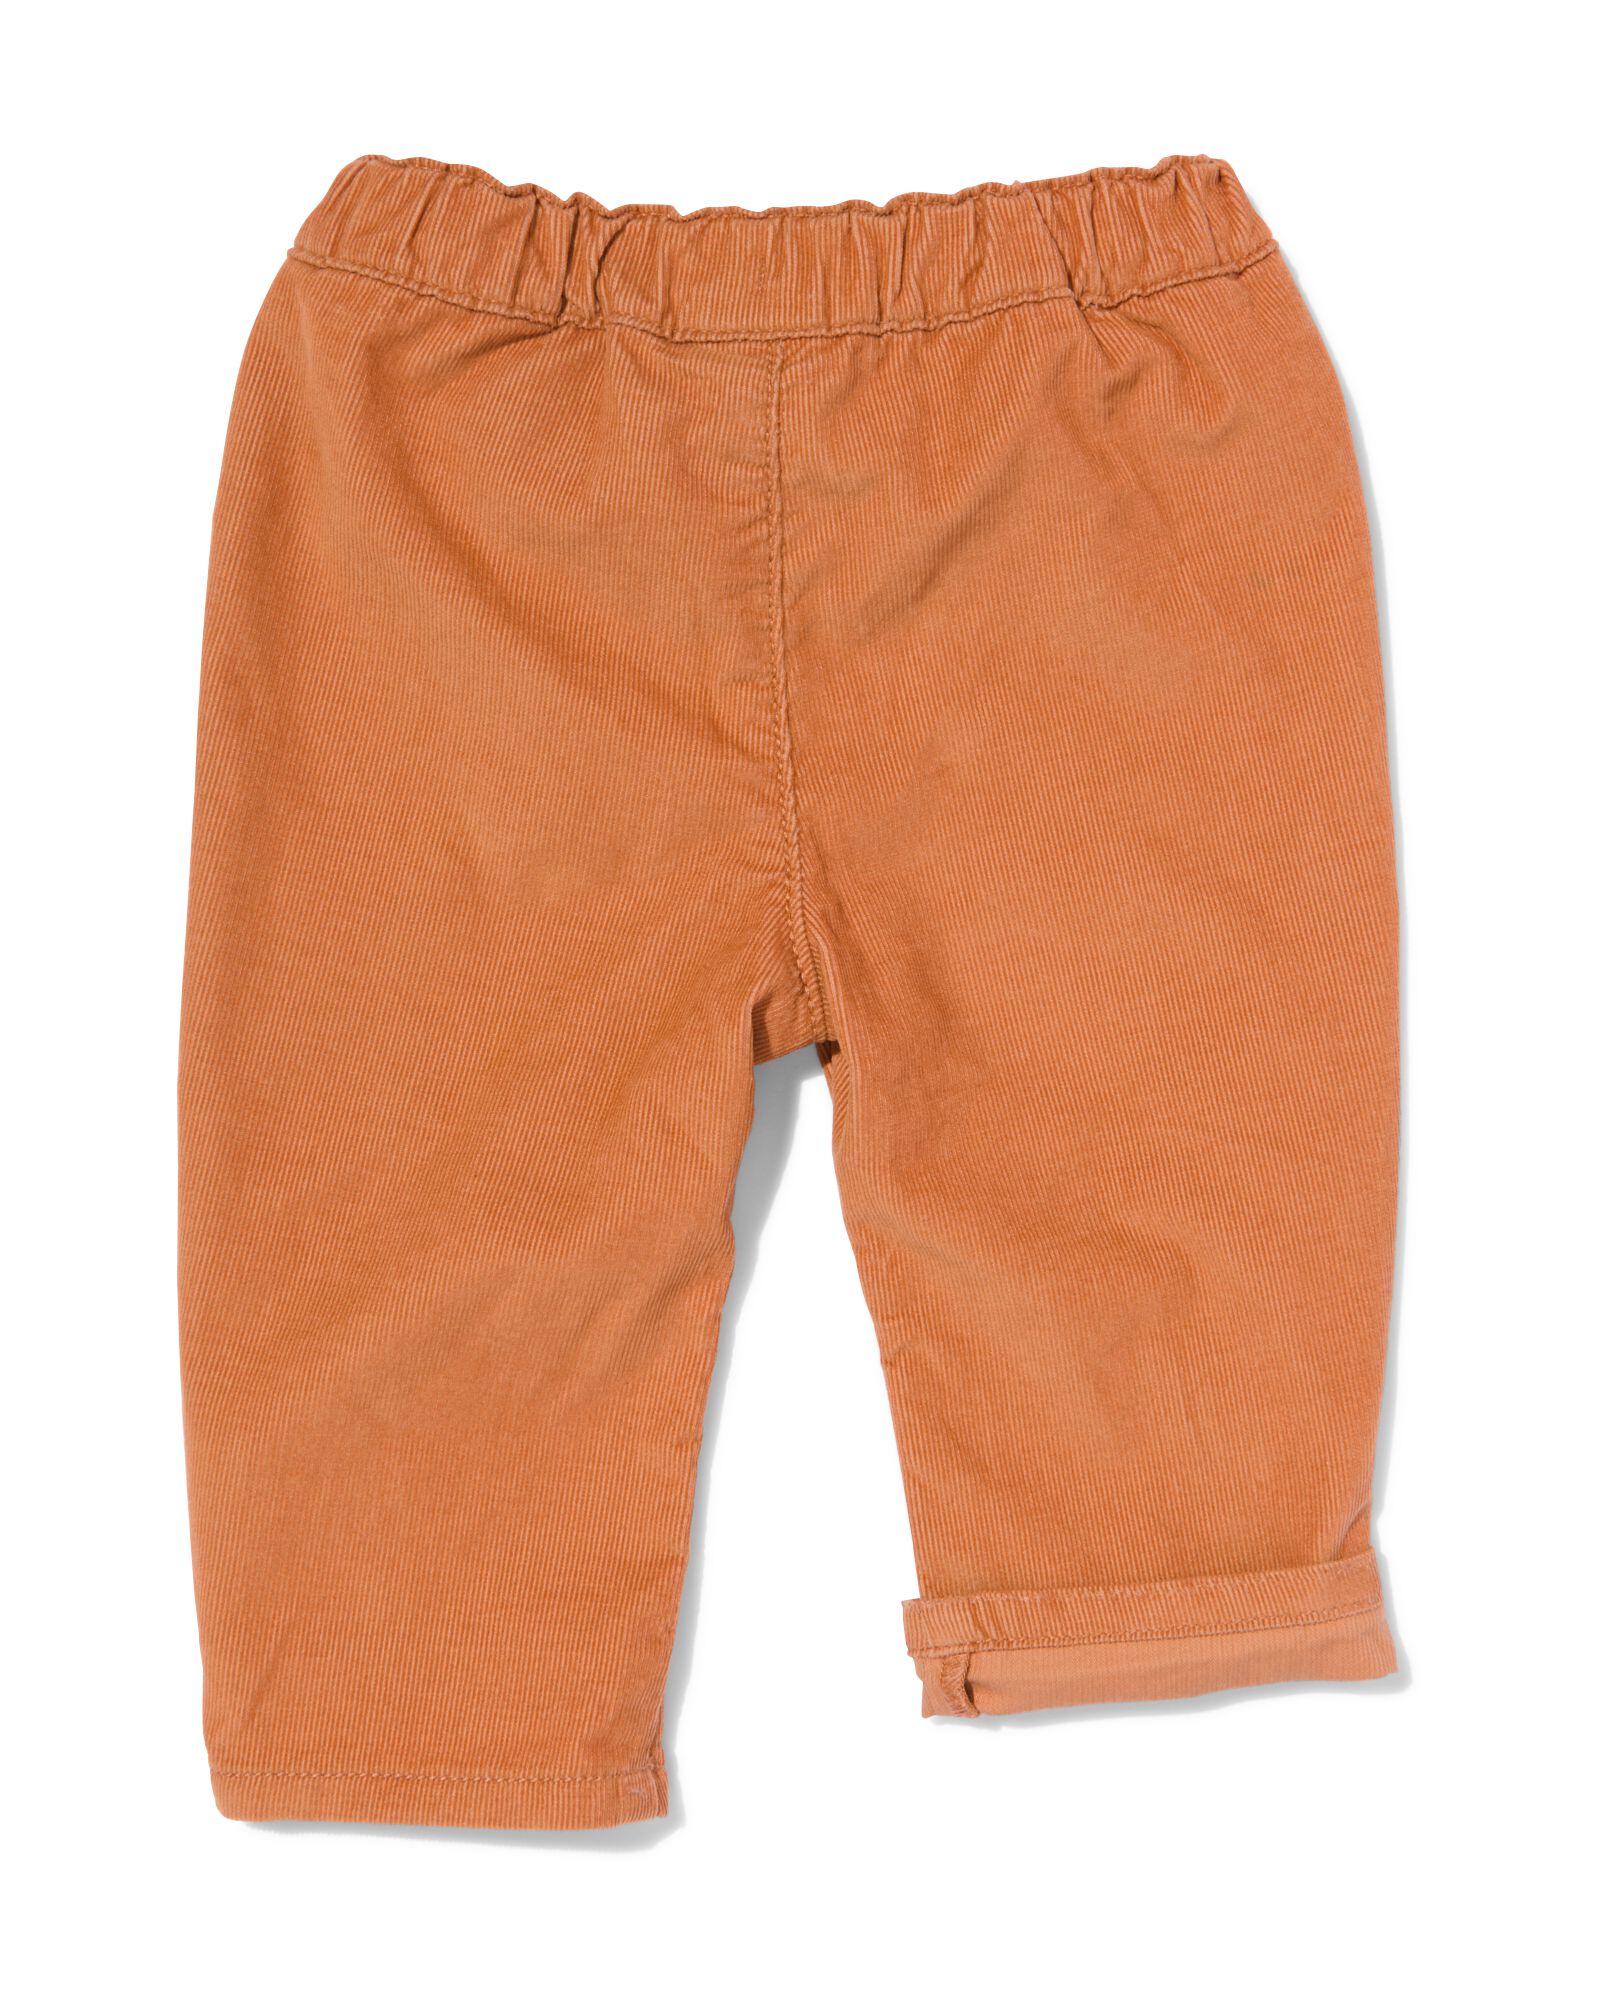 pantalon bébé côte marron marron - 33177740BROWN - HEMA